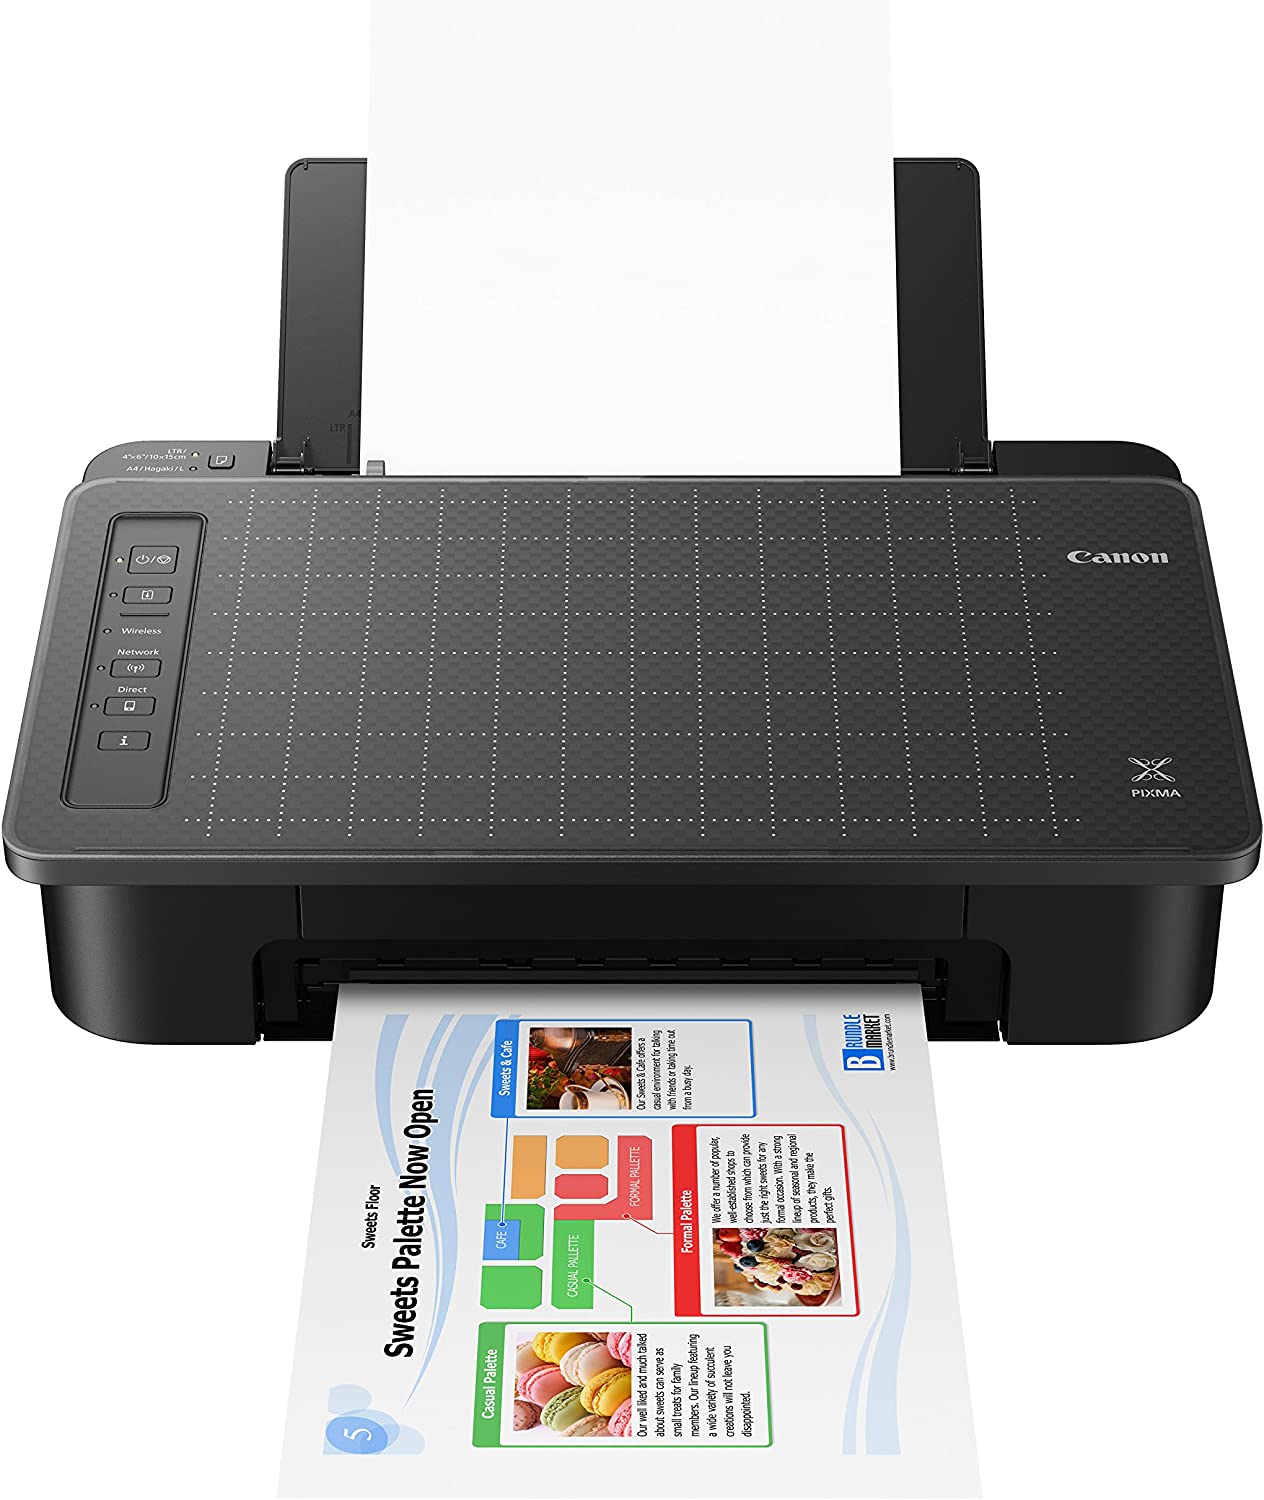 Canon TS302 Wireless Inkjet Printer, Black, Works with Alexa